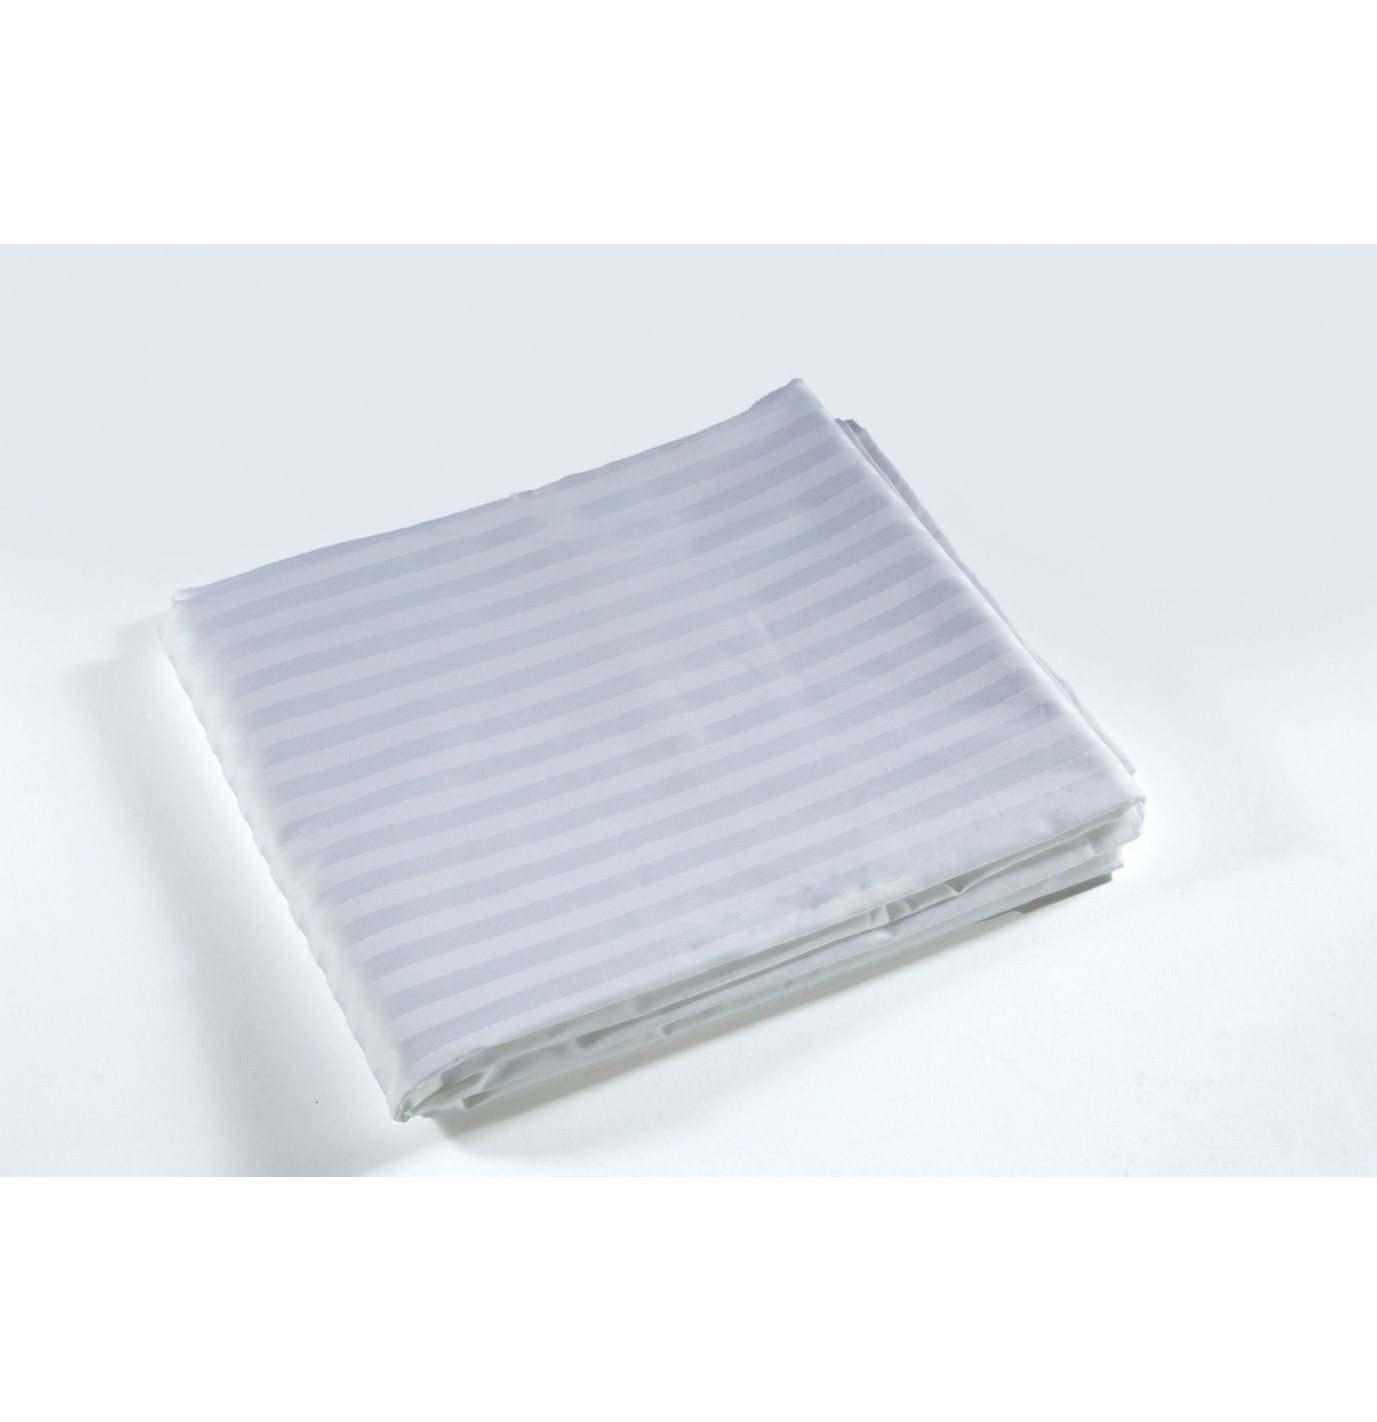 Bed Sheet White King PREMIUM 300x300cm - 300TC, 100% Cotton, Sateen ...